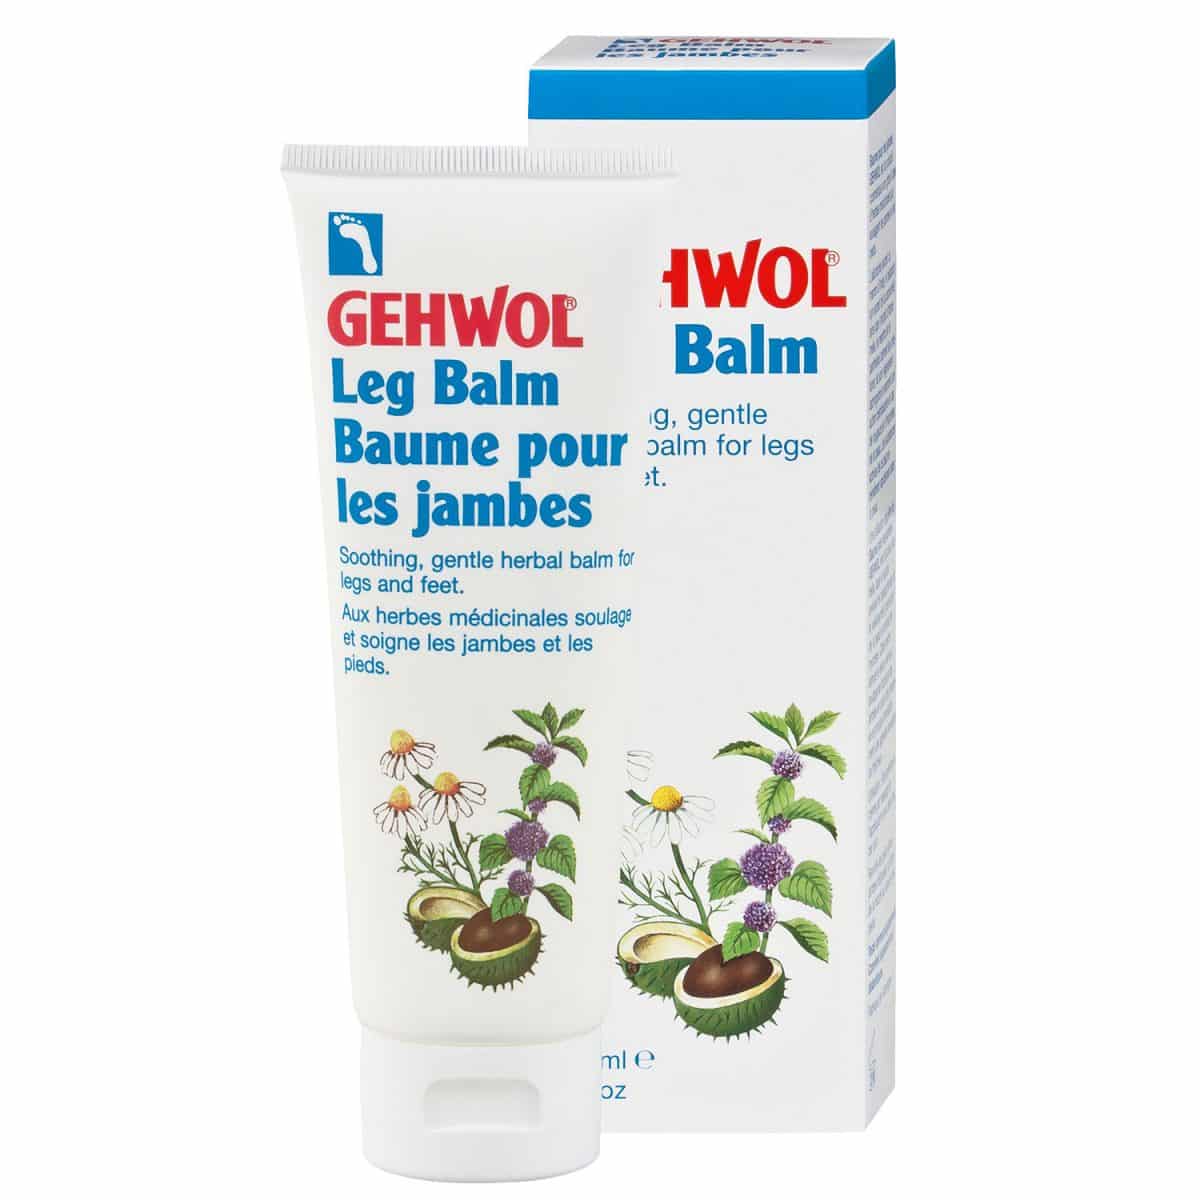 Gehwol-Baume pour les jambes 125 ml